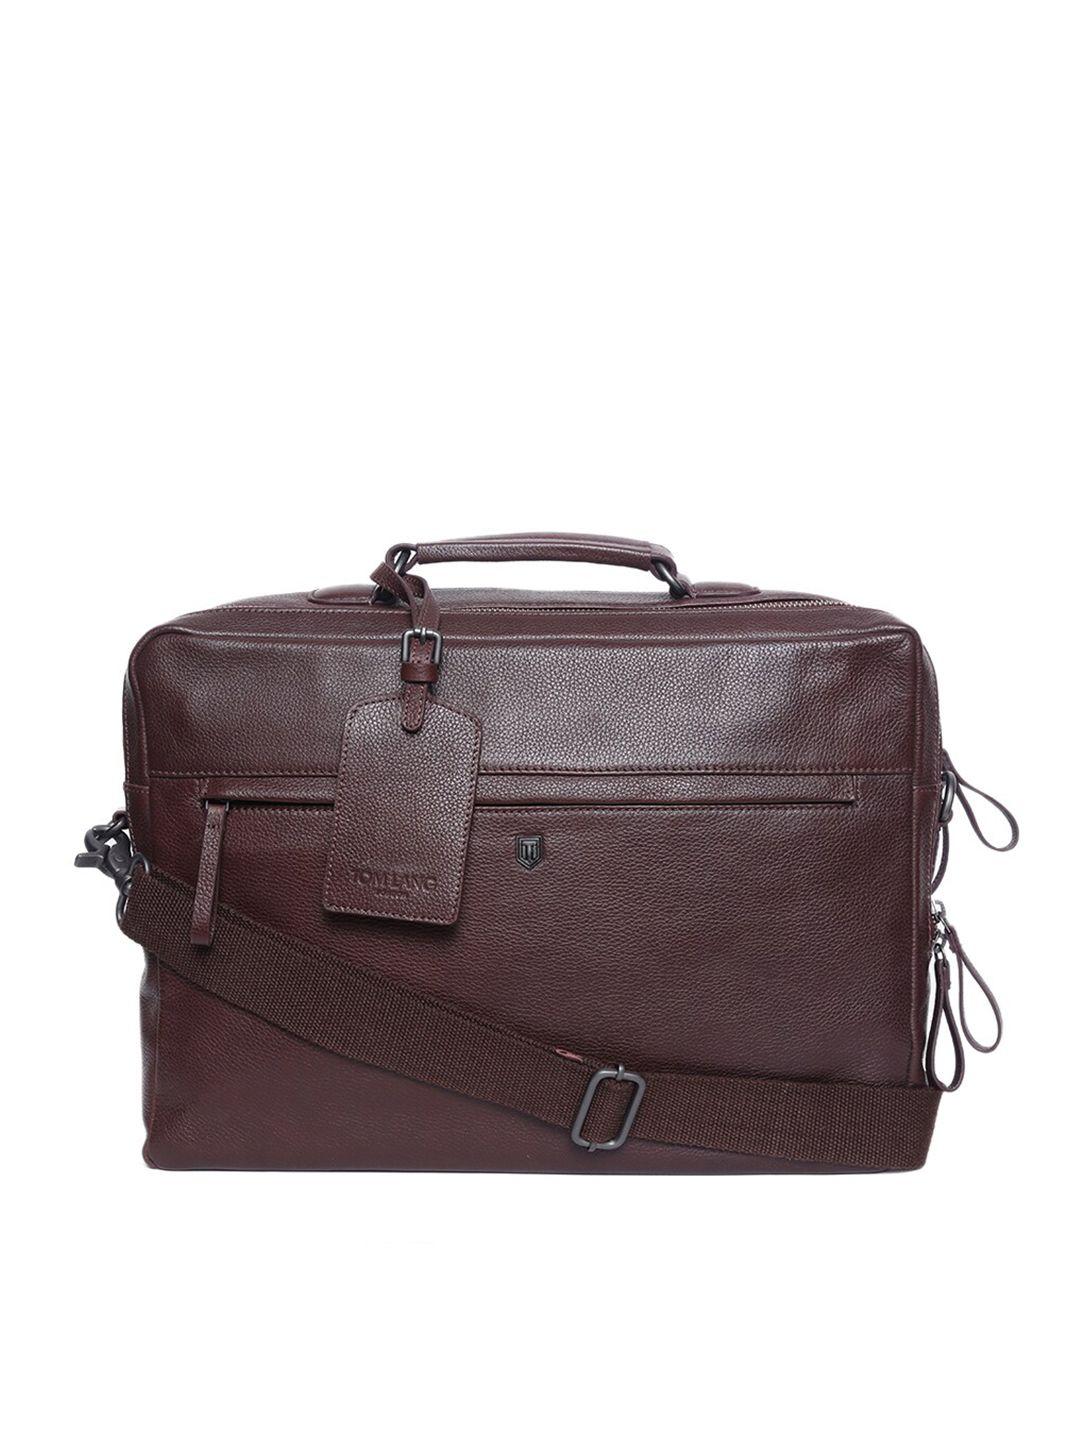 tom lang london unisex burgundy leather laptop bag